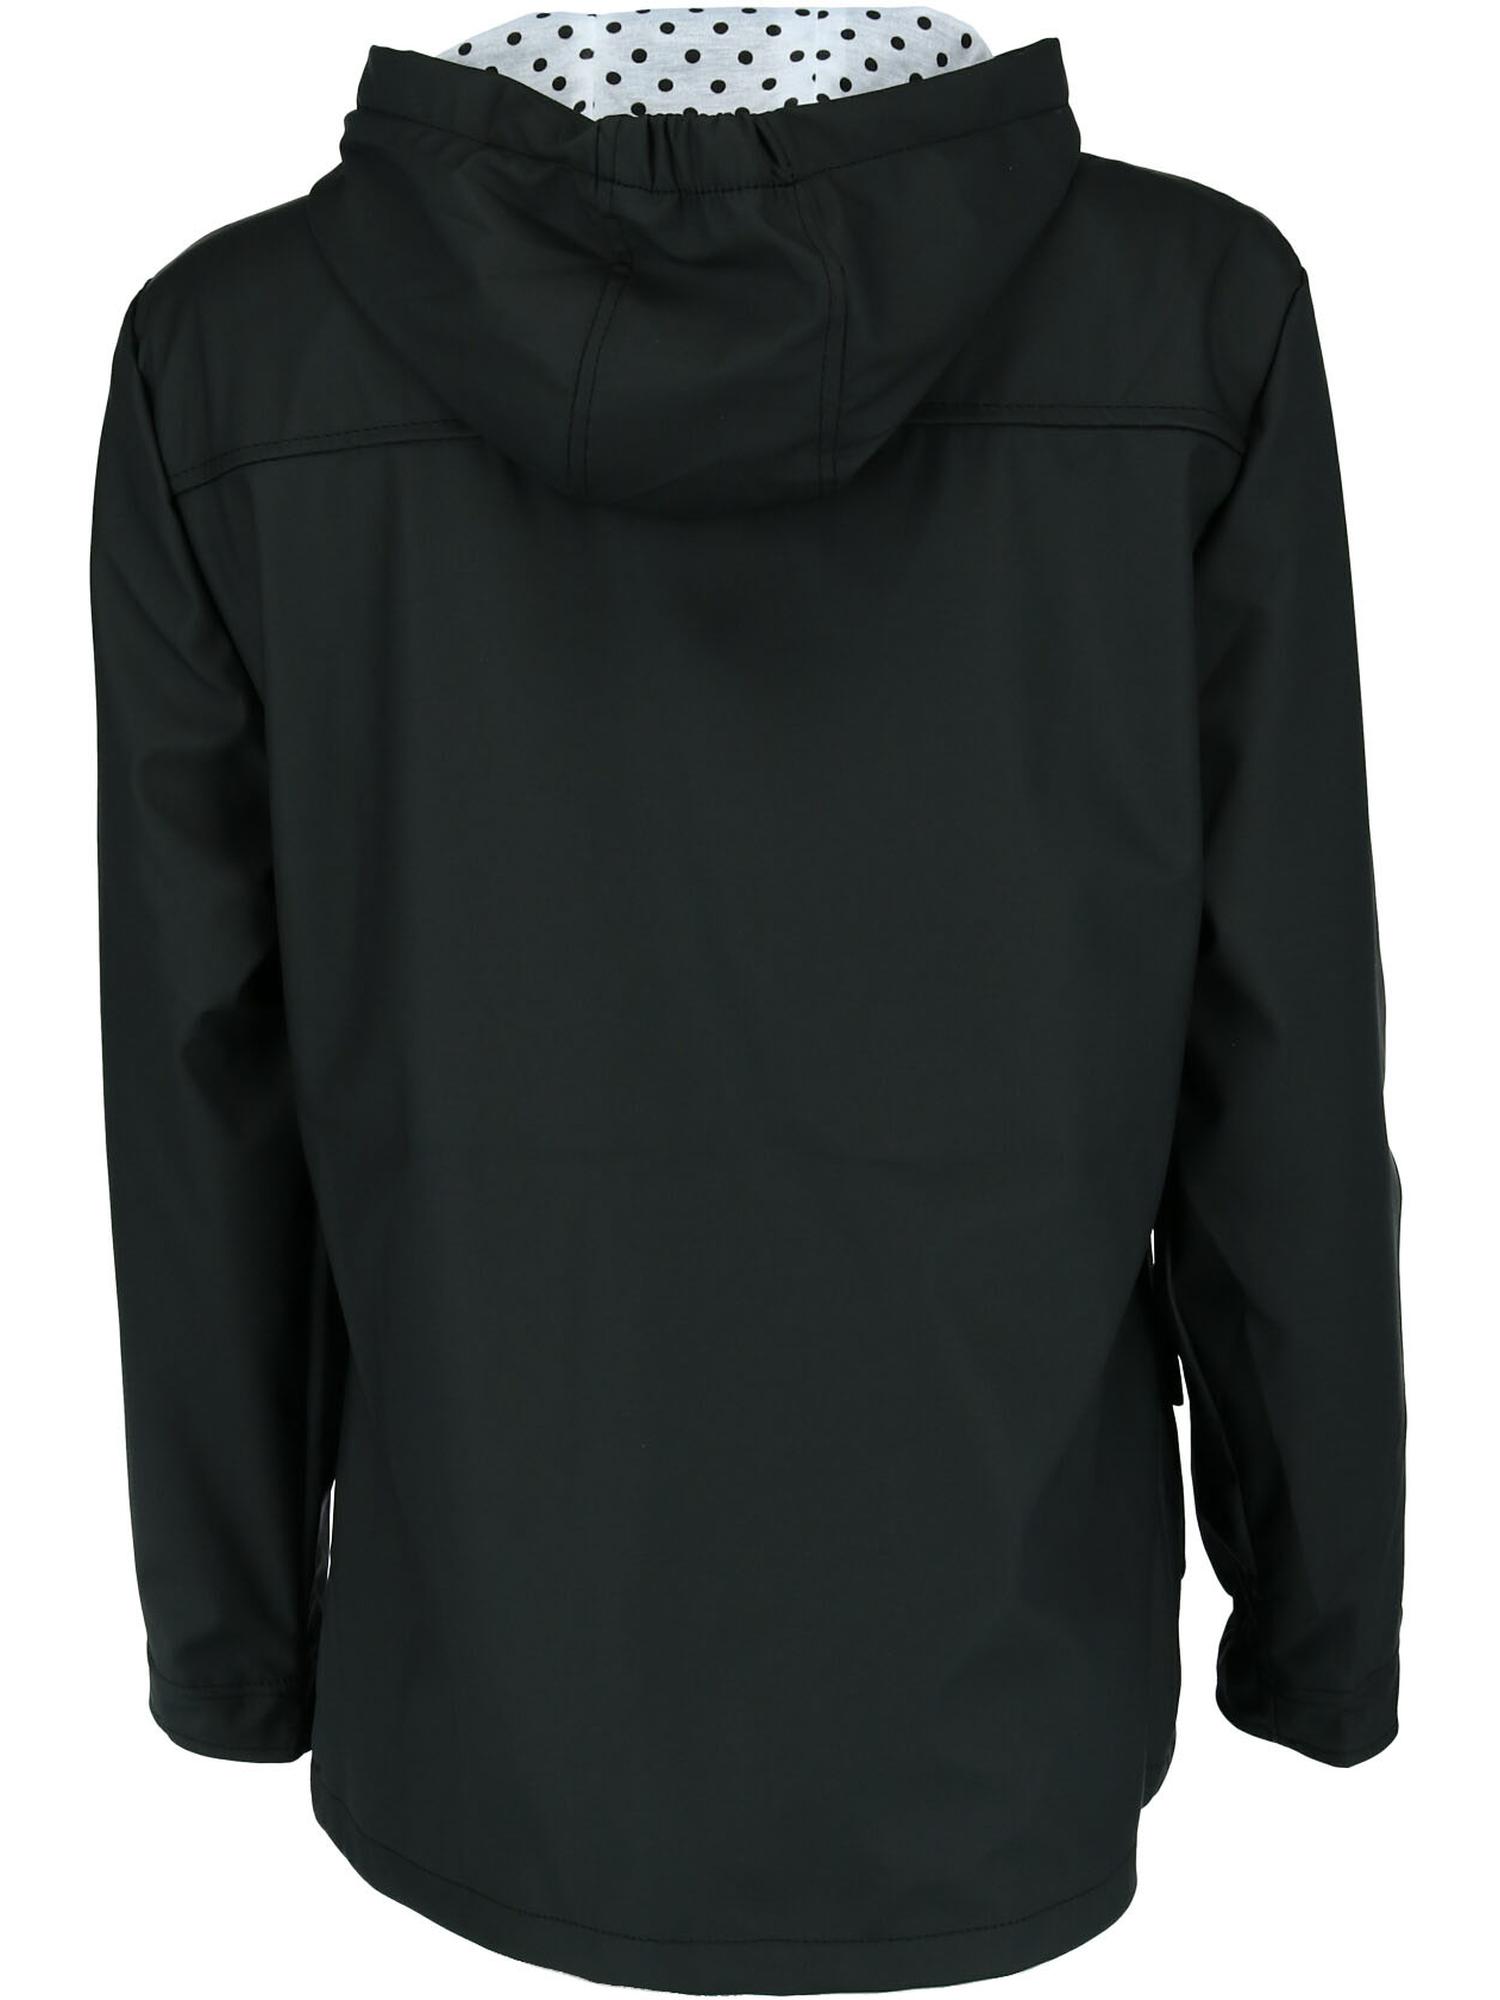 I5 Apparel Kid's Hooded Waxie Toggle Rain Slicker Jacket - image 2 of 4